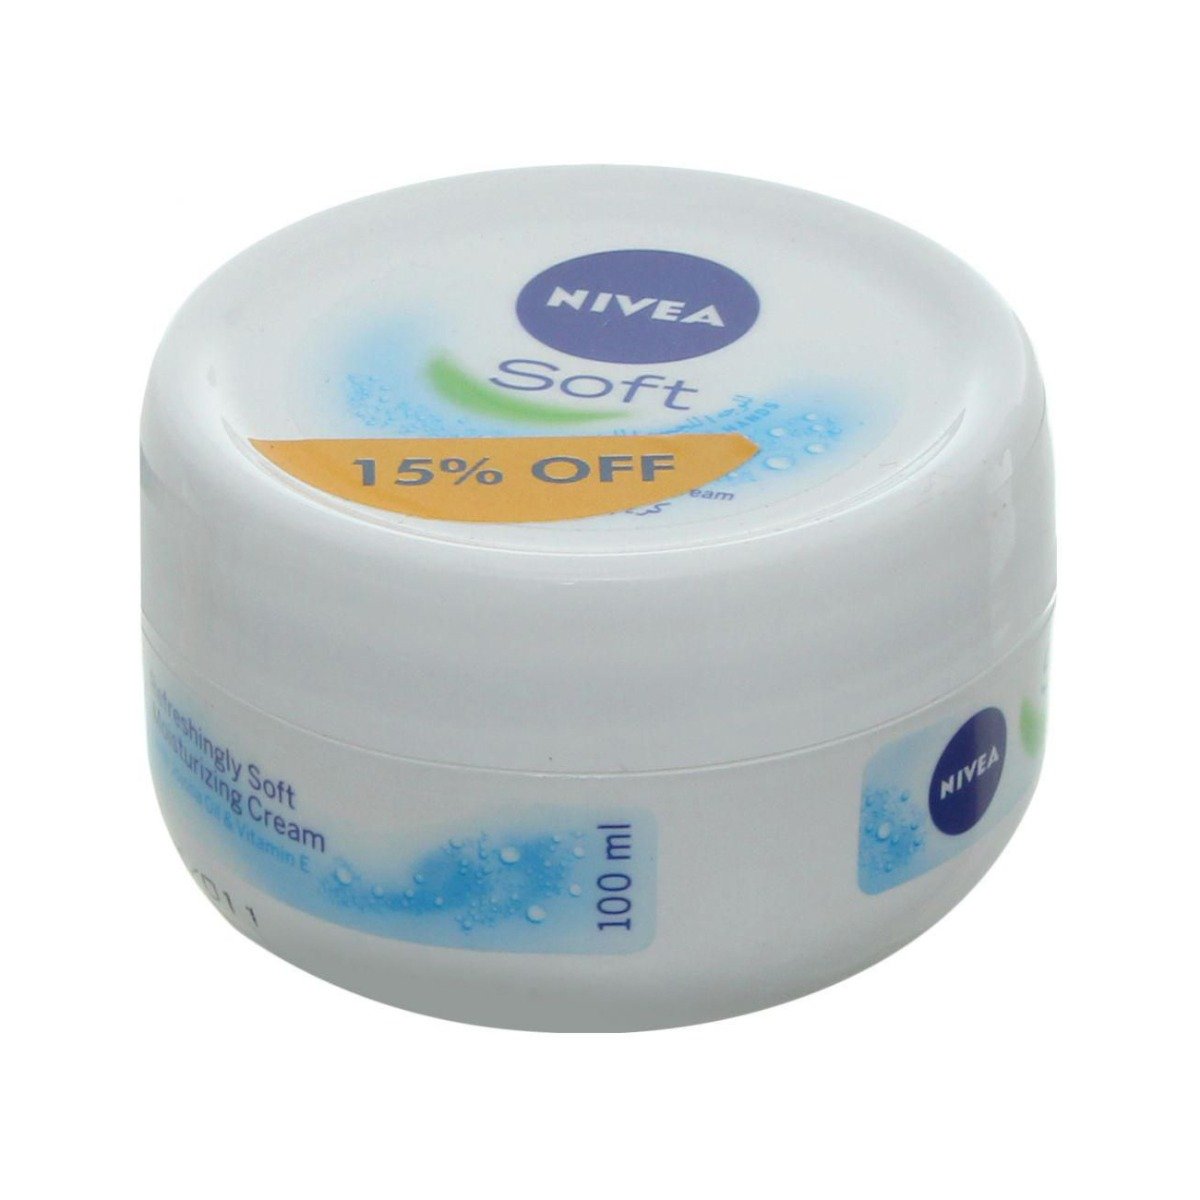 Nivea Soft Moisturizing Cream Offer (Discount 15%) - 100ml - Bloom Pharmacy